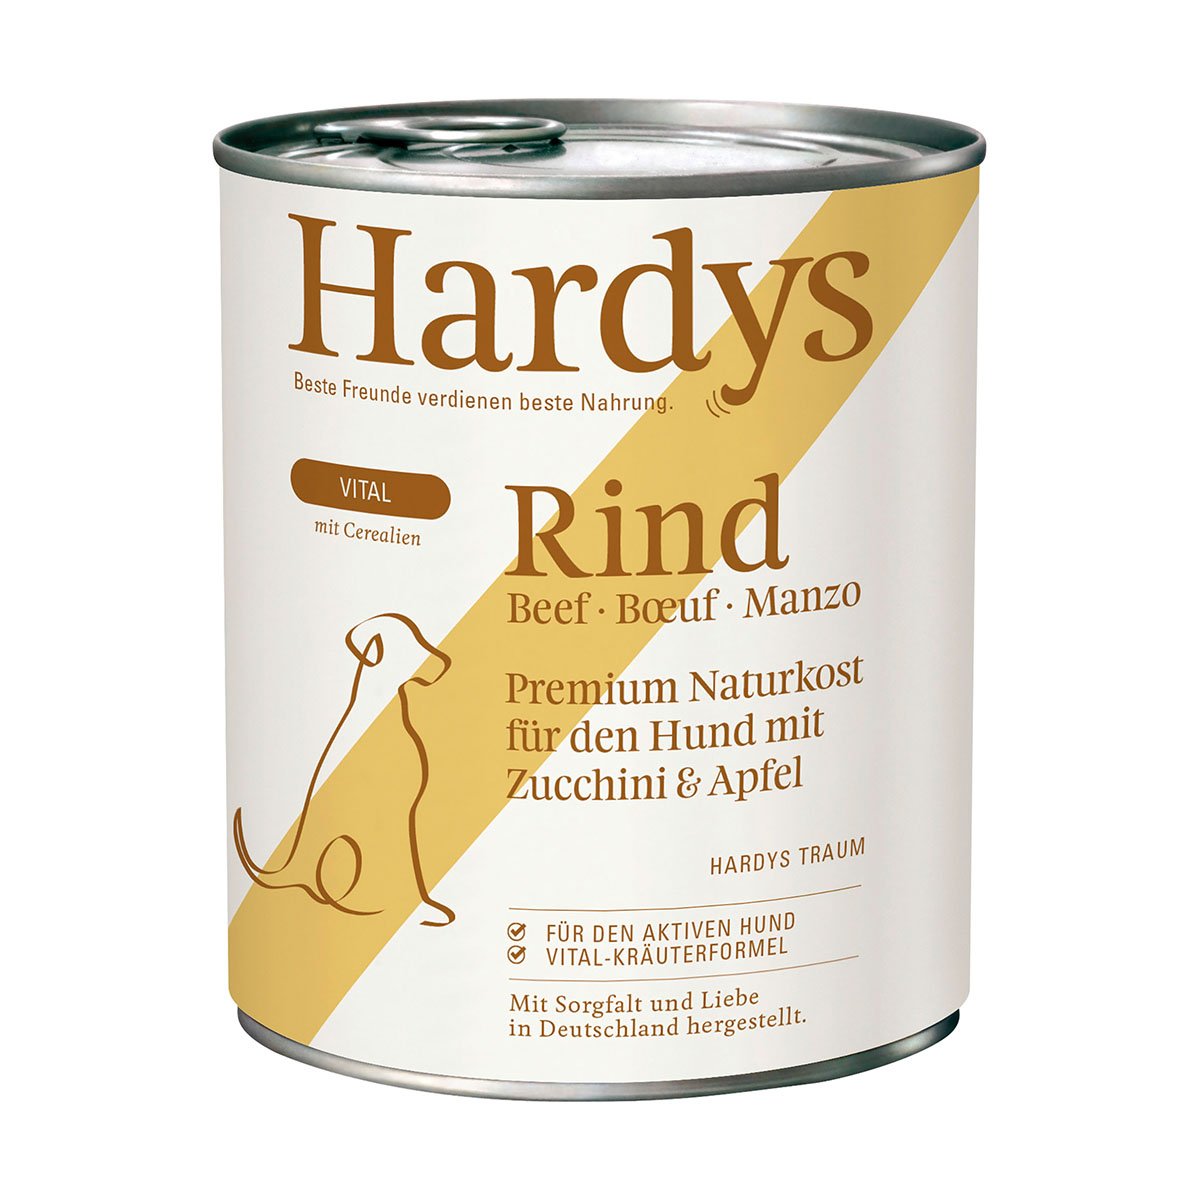 Hardys VITAL Rind mit Zucchini & Apfel 12x800g von Hardys